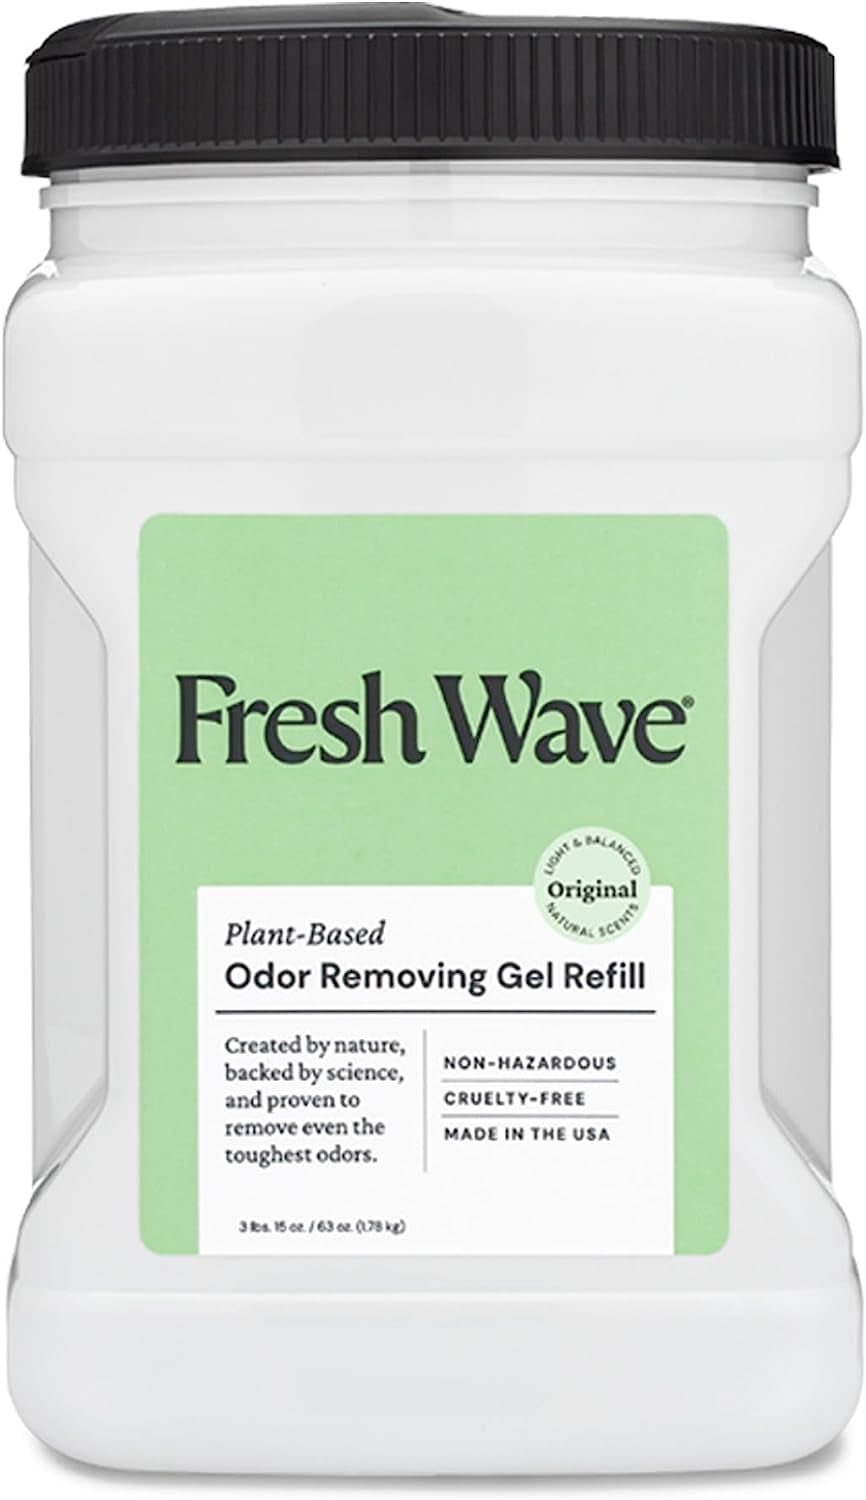 Odor Removing Gel Refill, 63 Oz.| Safer Odor Absorbers for Home | Natural Plant-Based Odor Eliminator | Every 15 Oz. Lasts 30-60 Days | for Cooking, Trash & Pets